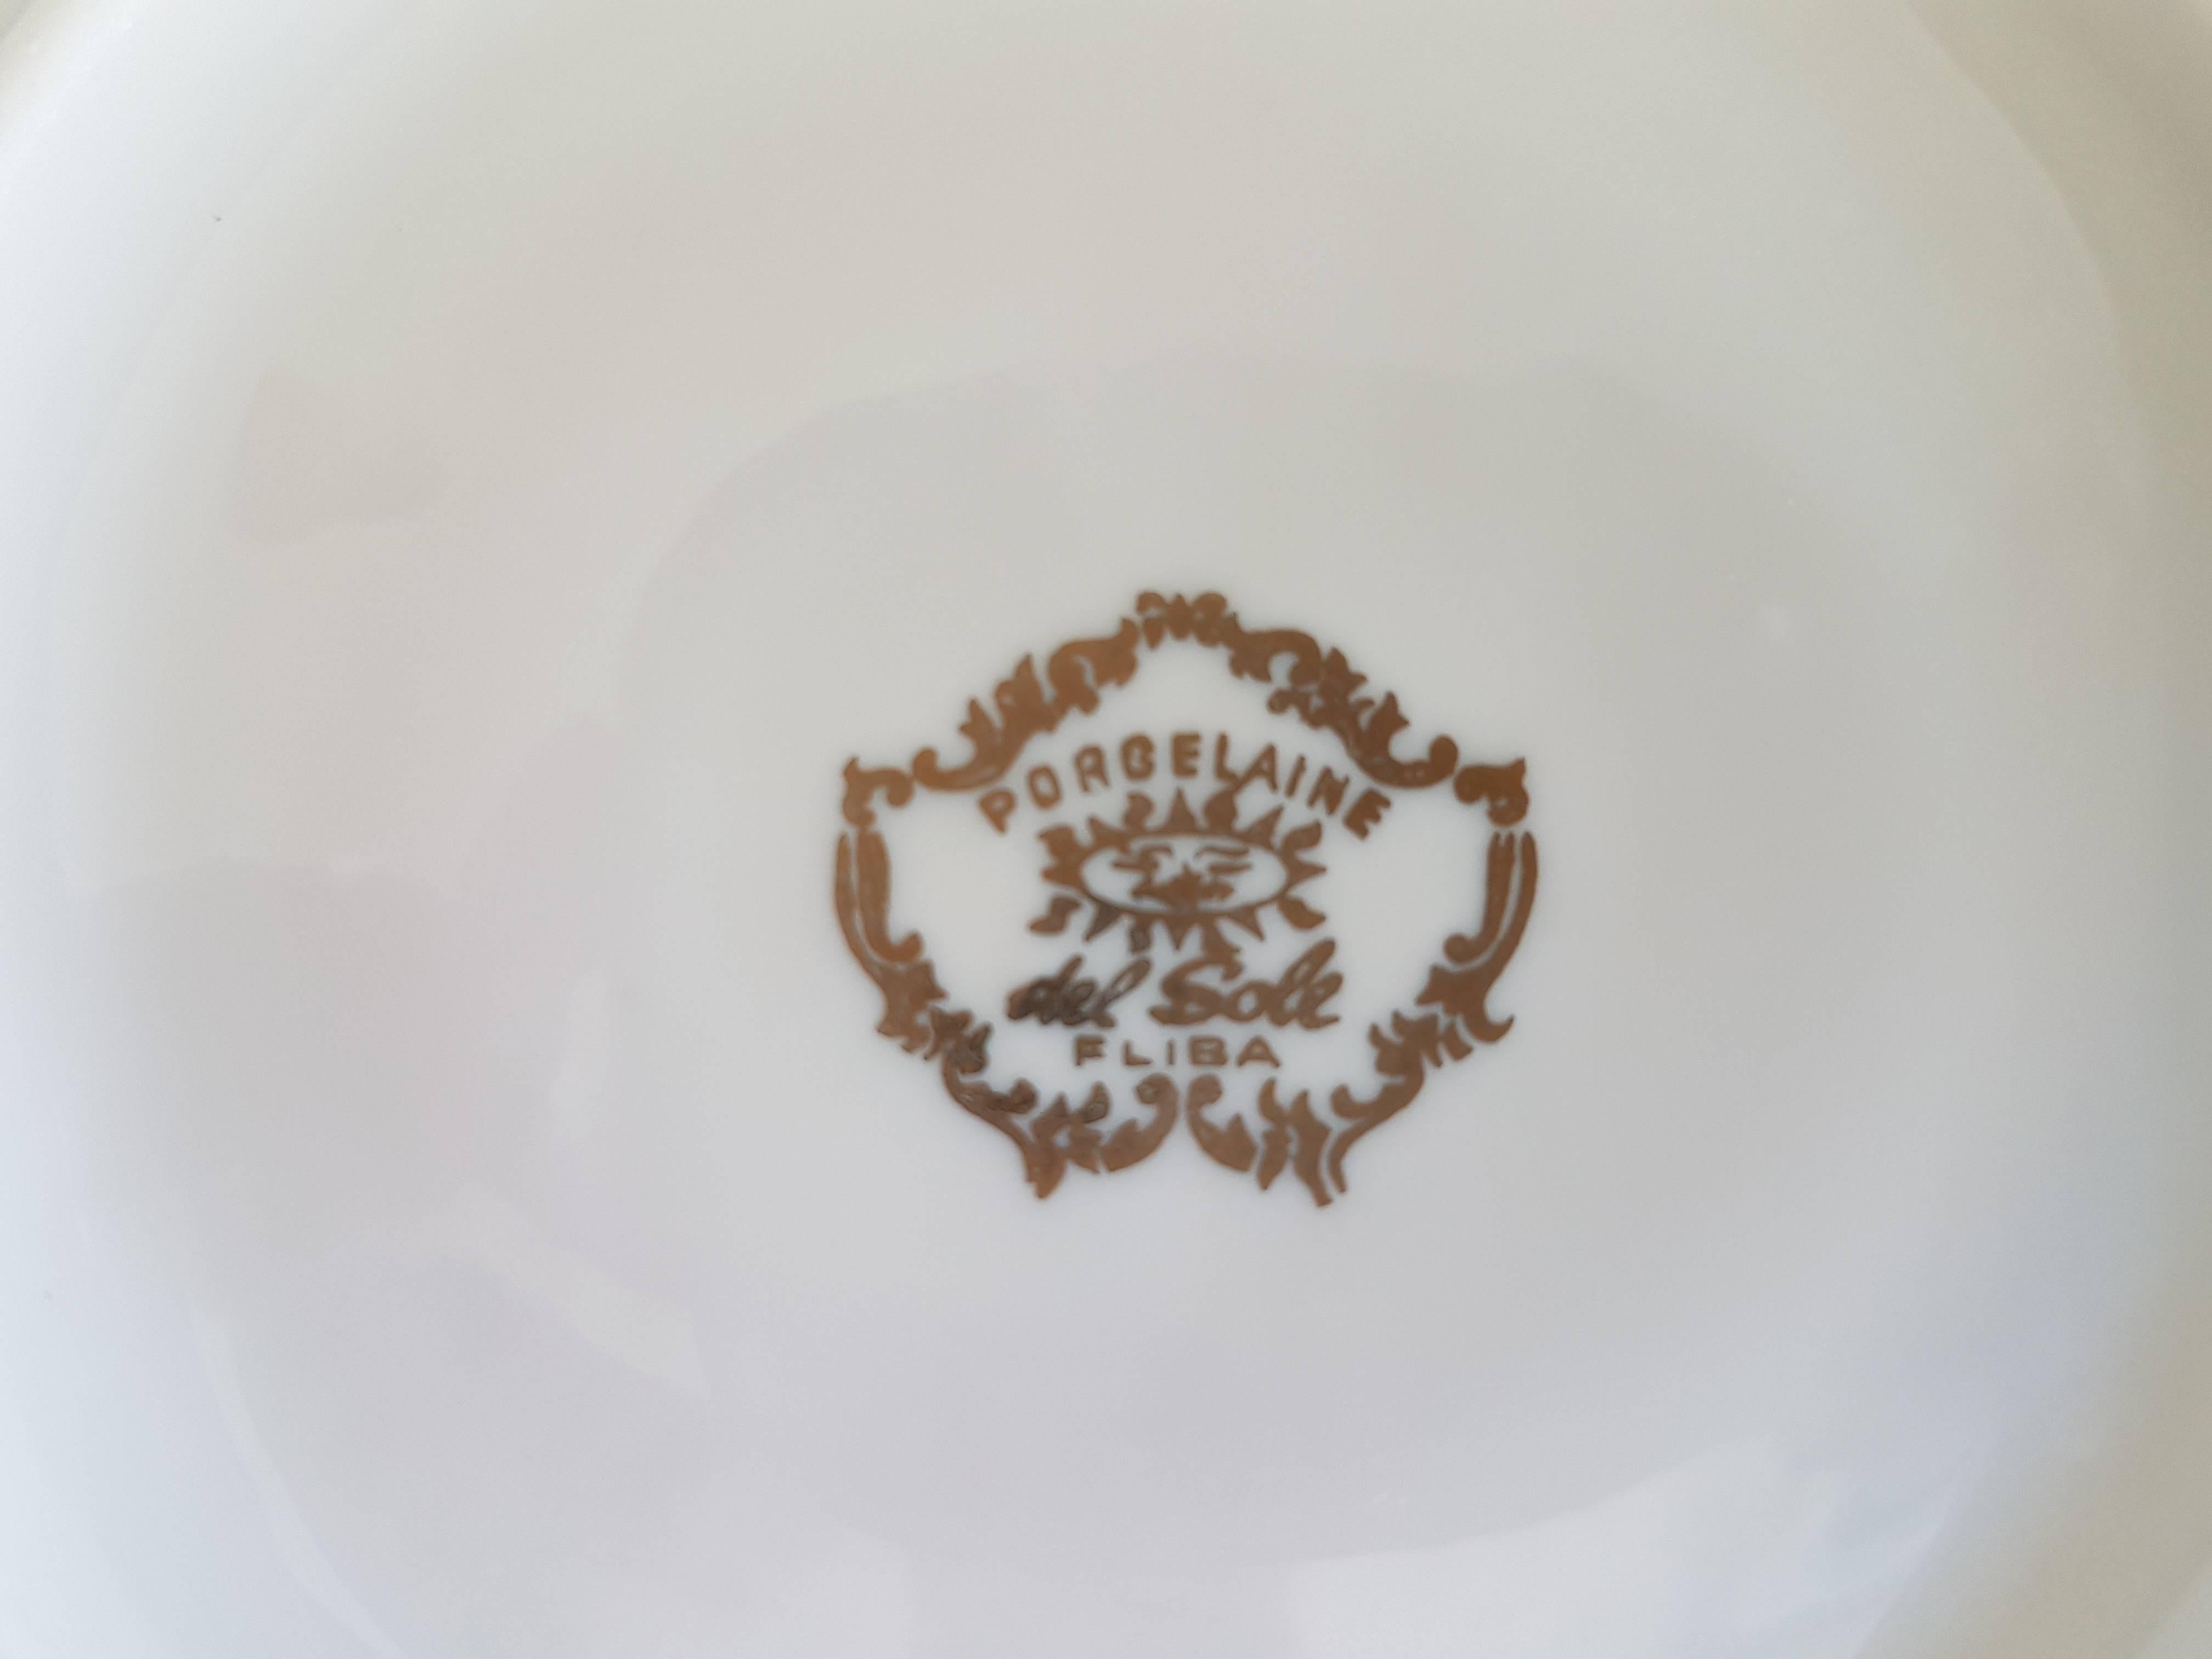 Classic Italian White and Gold Fine Porcelain Tea Set For Sale 1